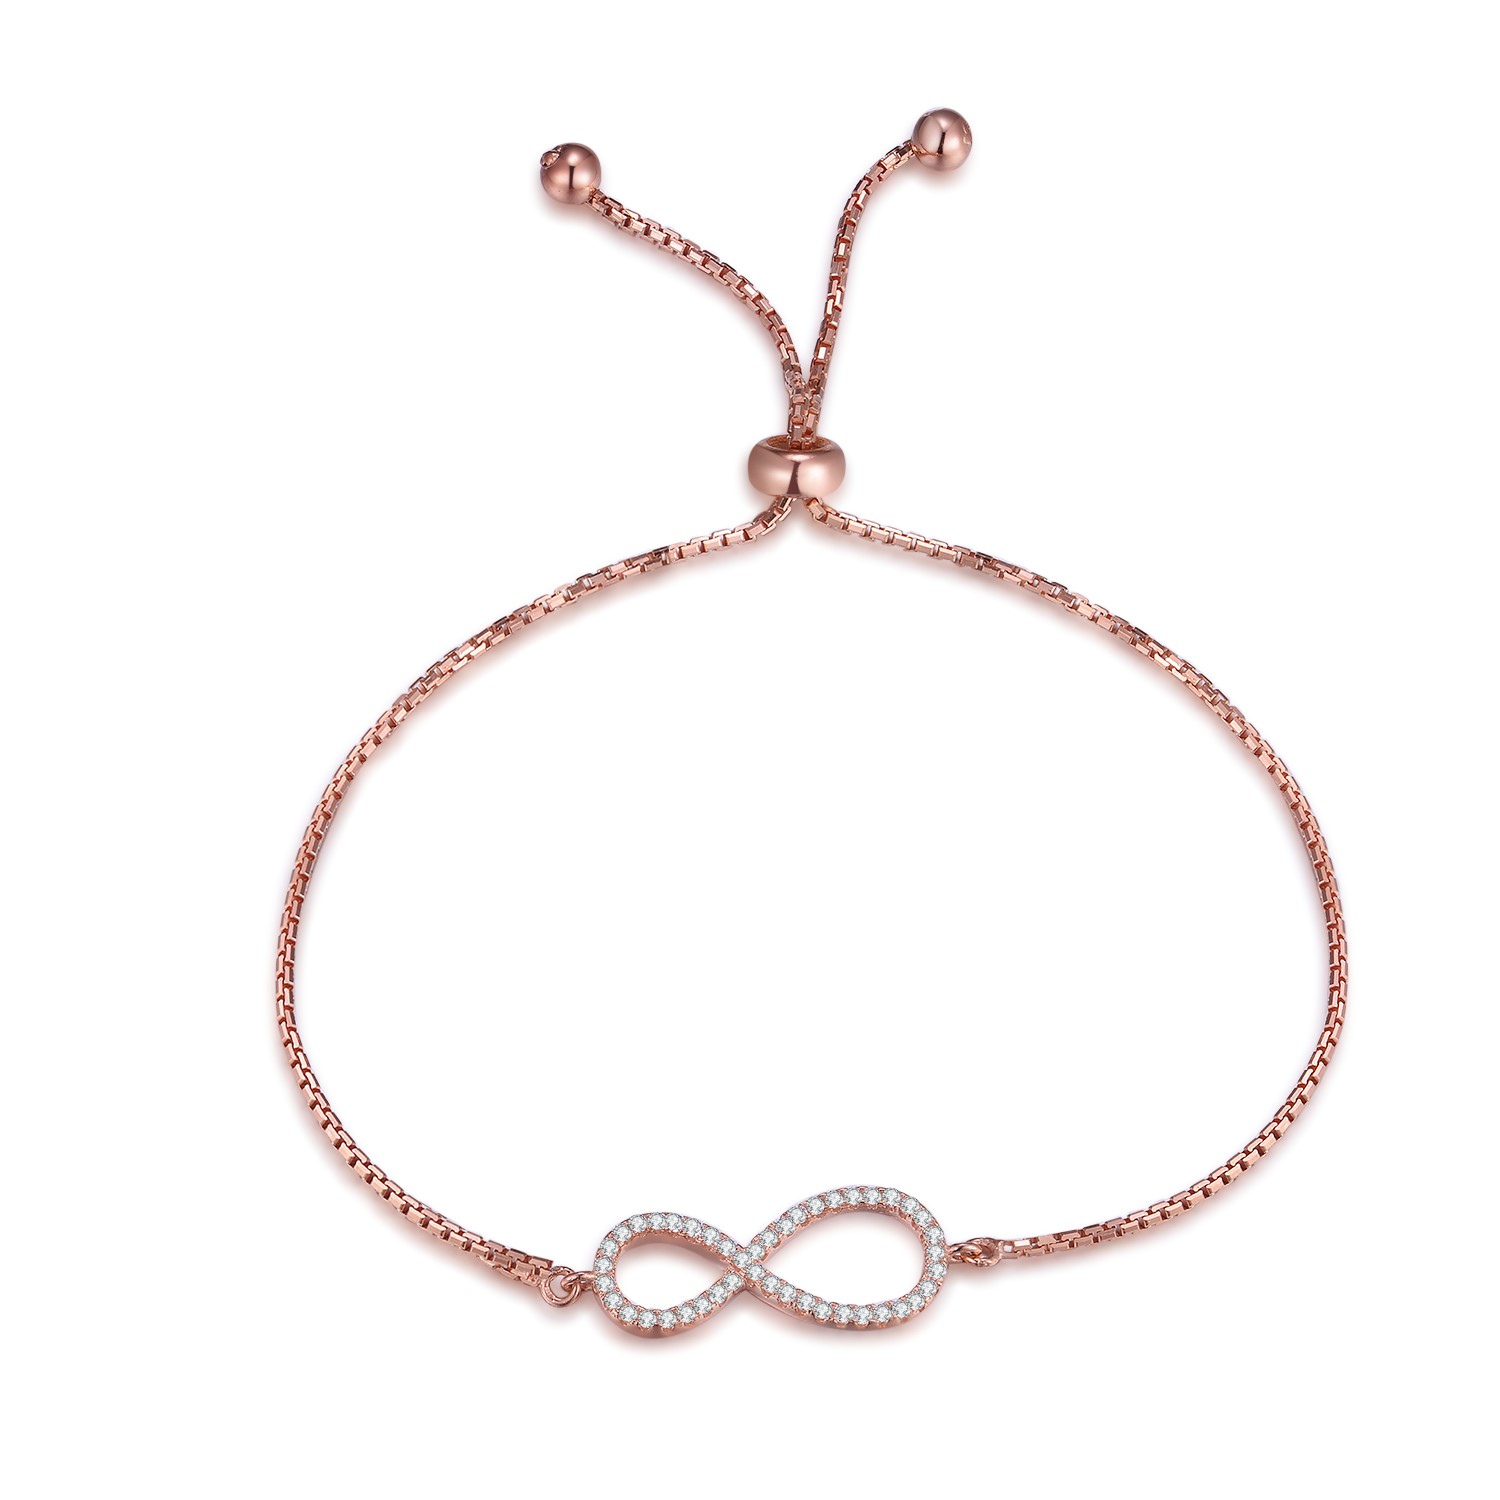 Bracelet Jewelry Infinity Symbol Sterling Silver Chain Bracelet Expandable and Adjustable Wire Brace